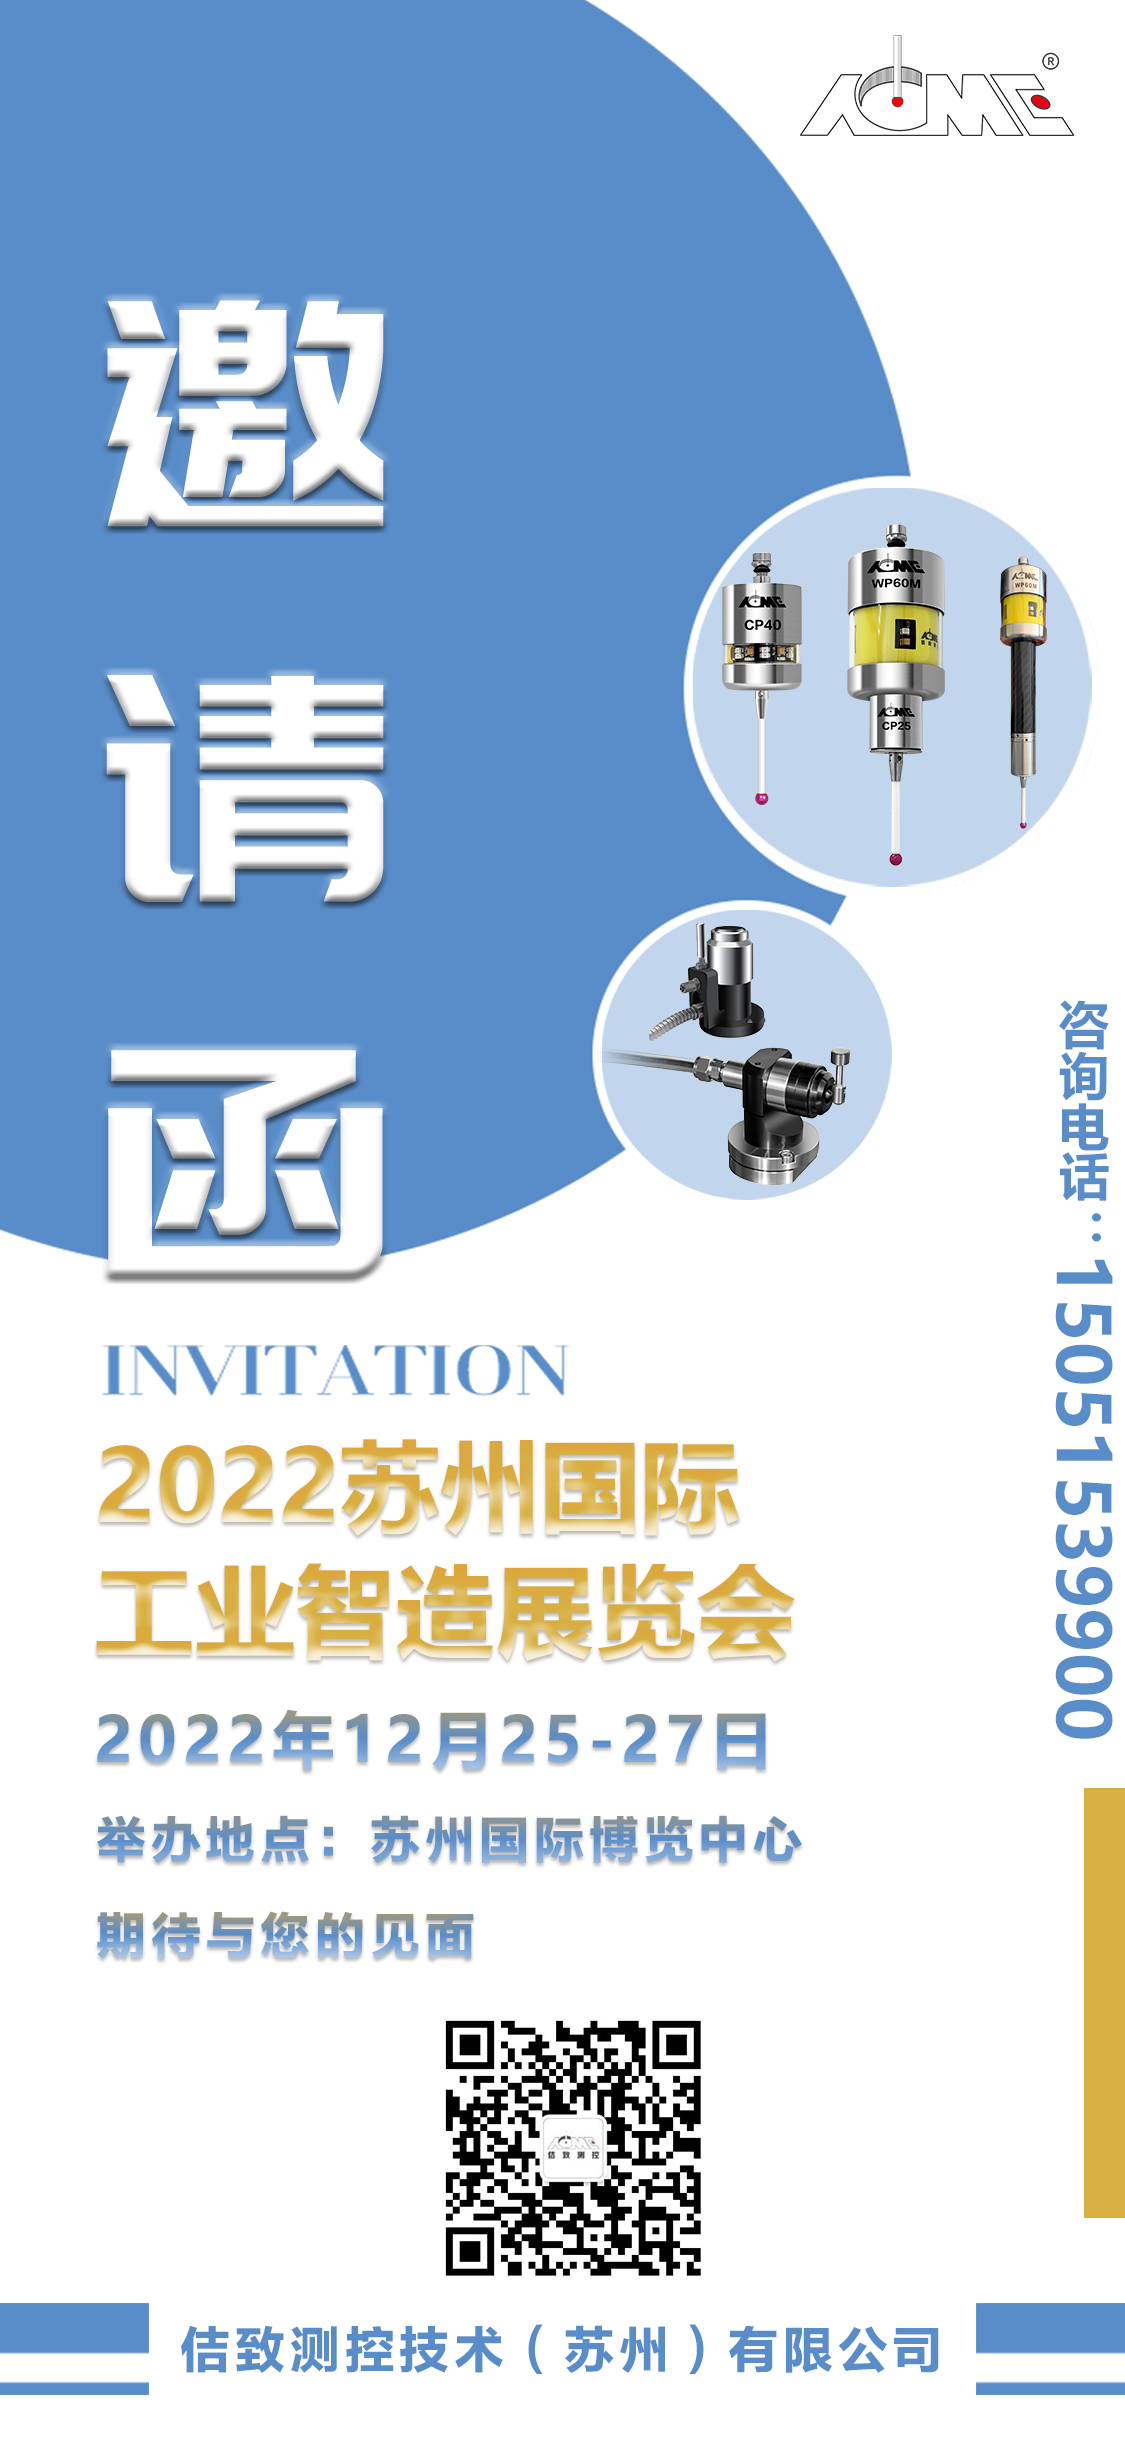 Invitation letter to 2022 Suzhou International Industrial Intelligent Manufacturing Exhibition (6)